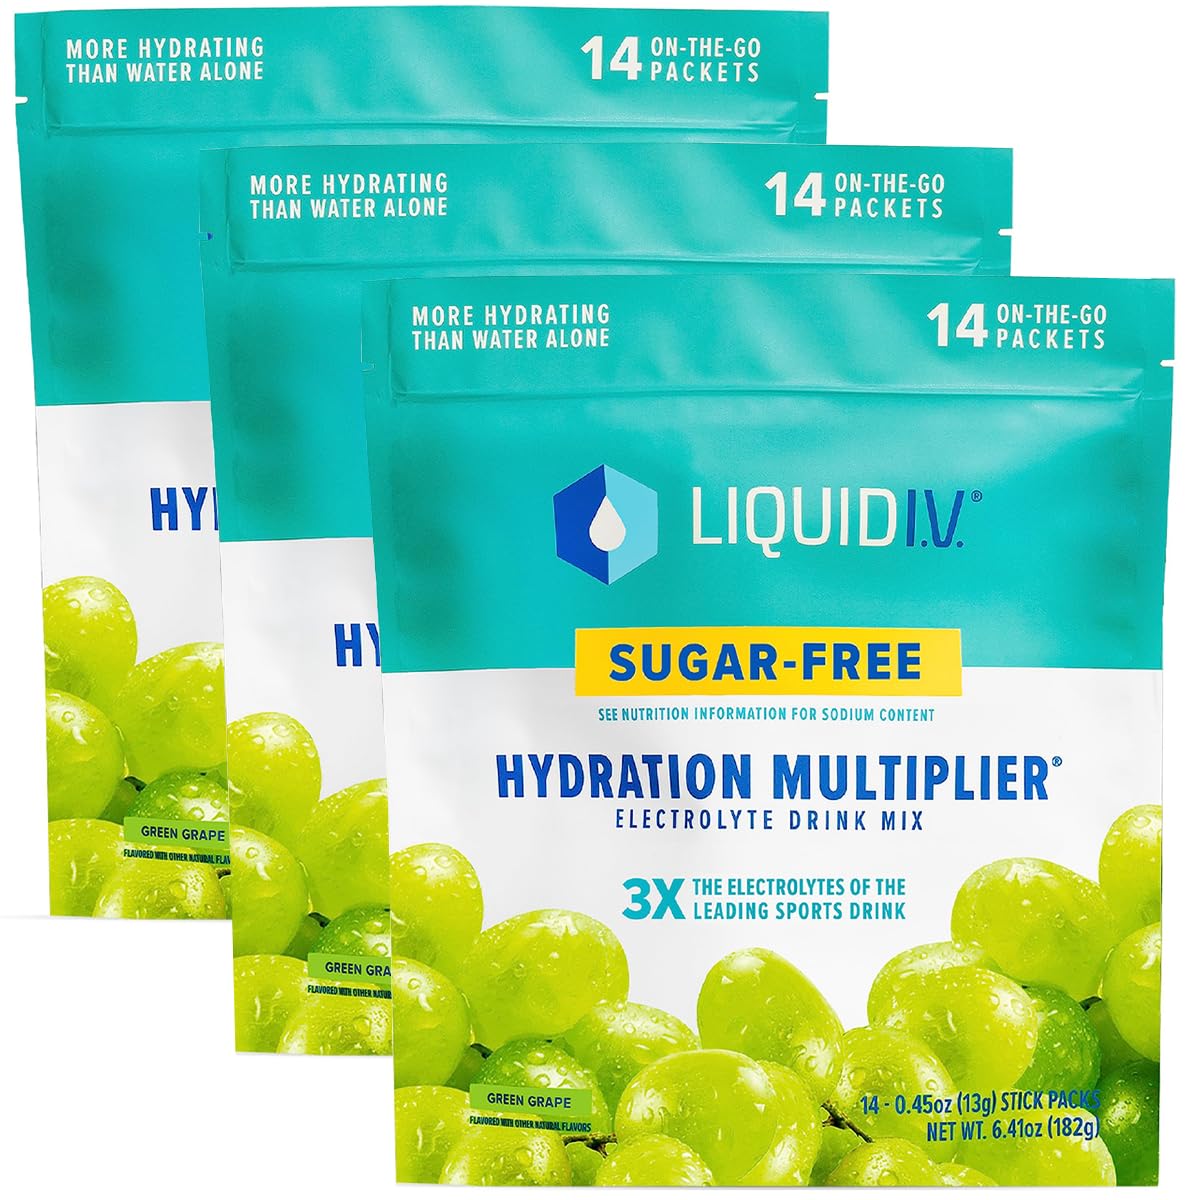 Liquid I.V. Sugar-Free Hydration Multiplier - Green Grape ? Sugar-Free